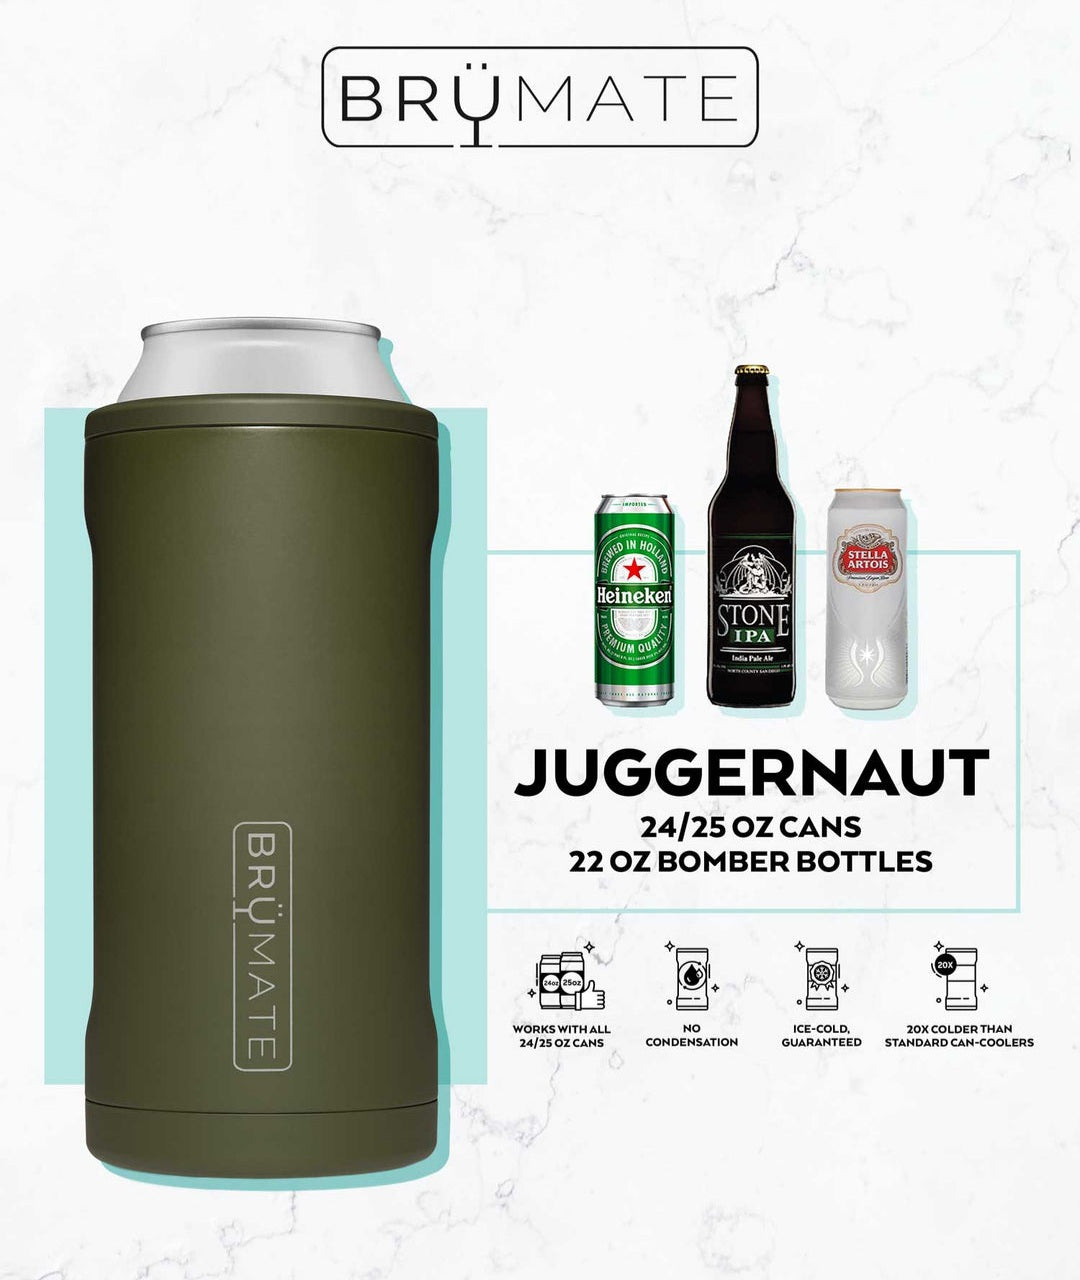 Brumate hopsulator juggernaut 24/25 oz cans